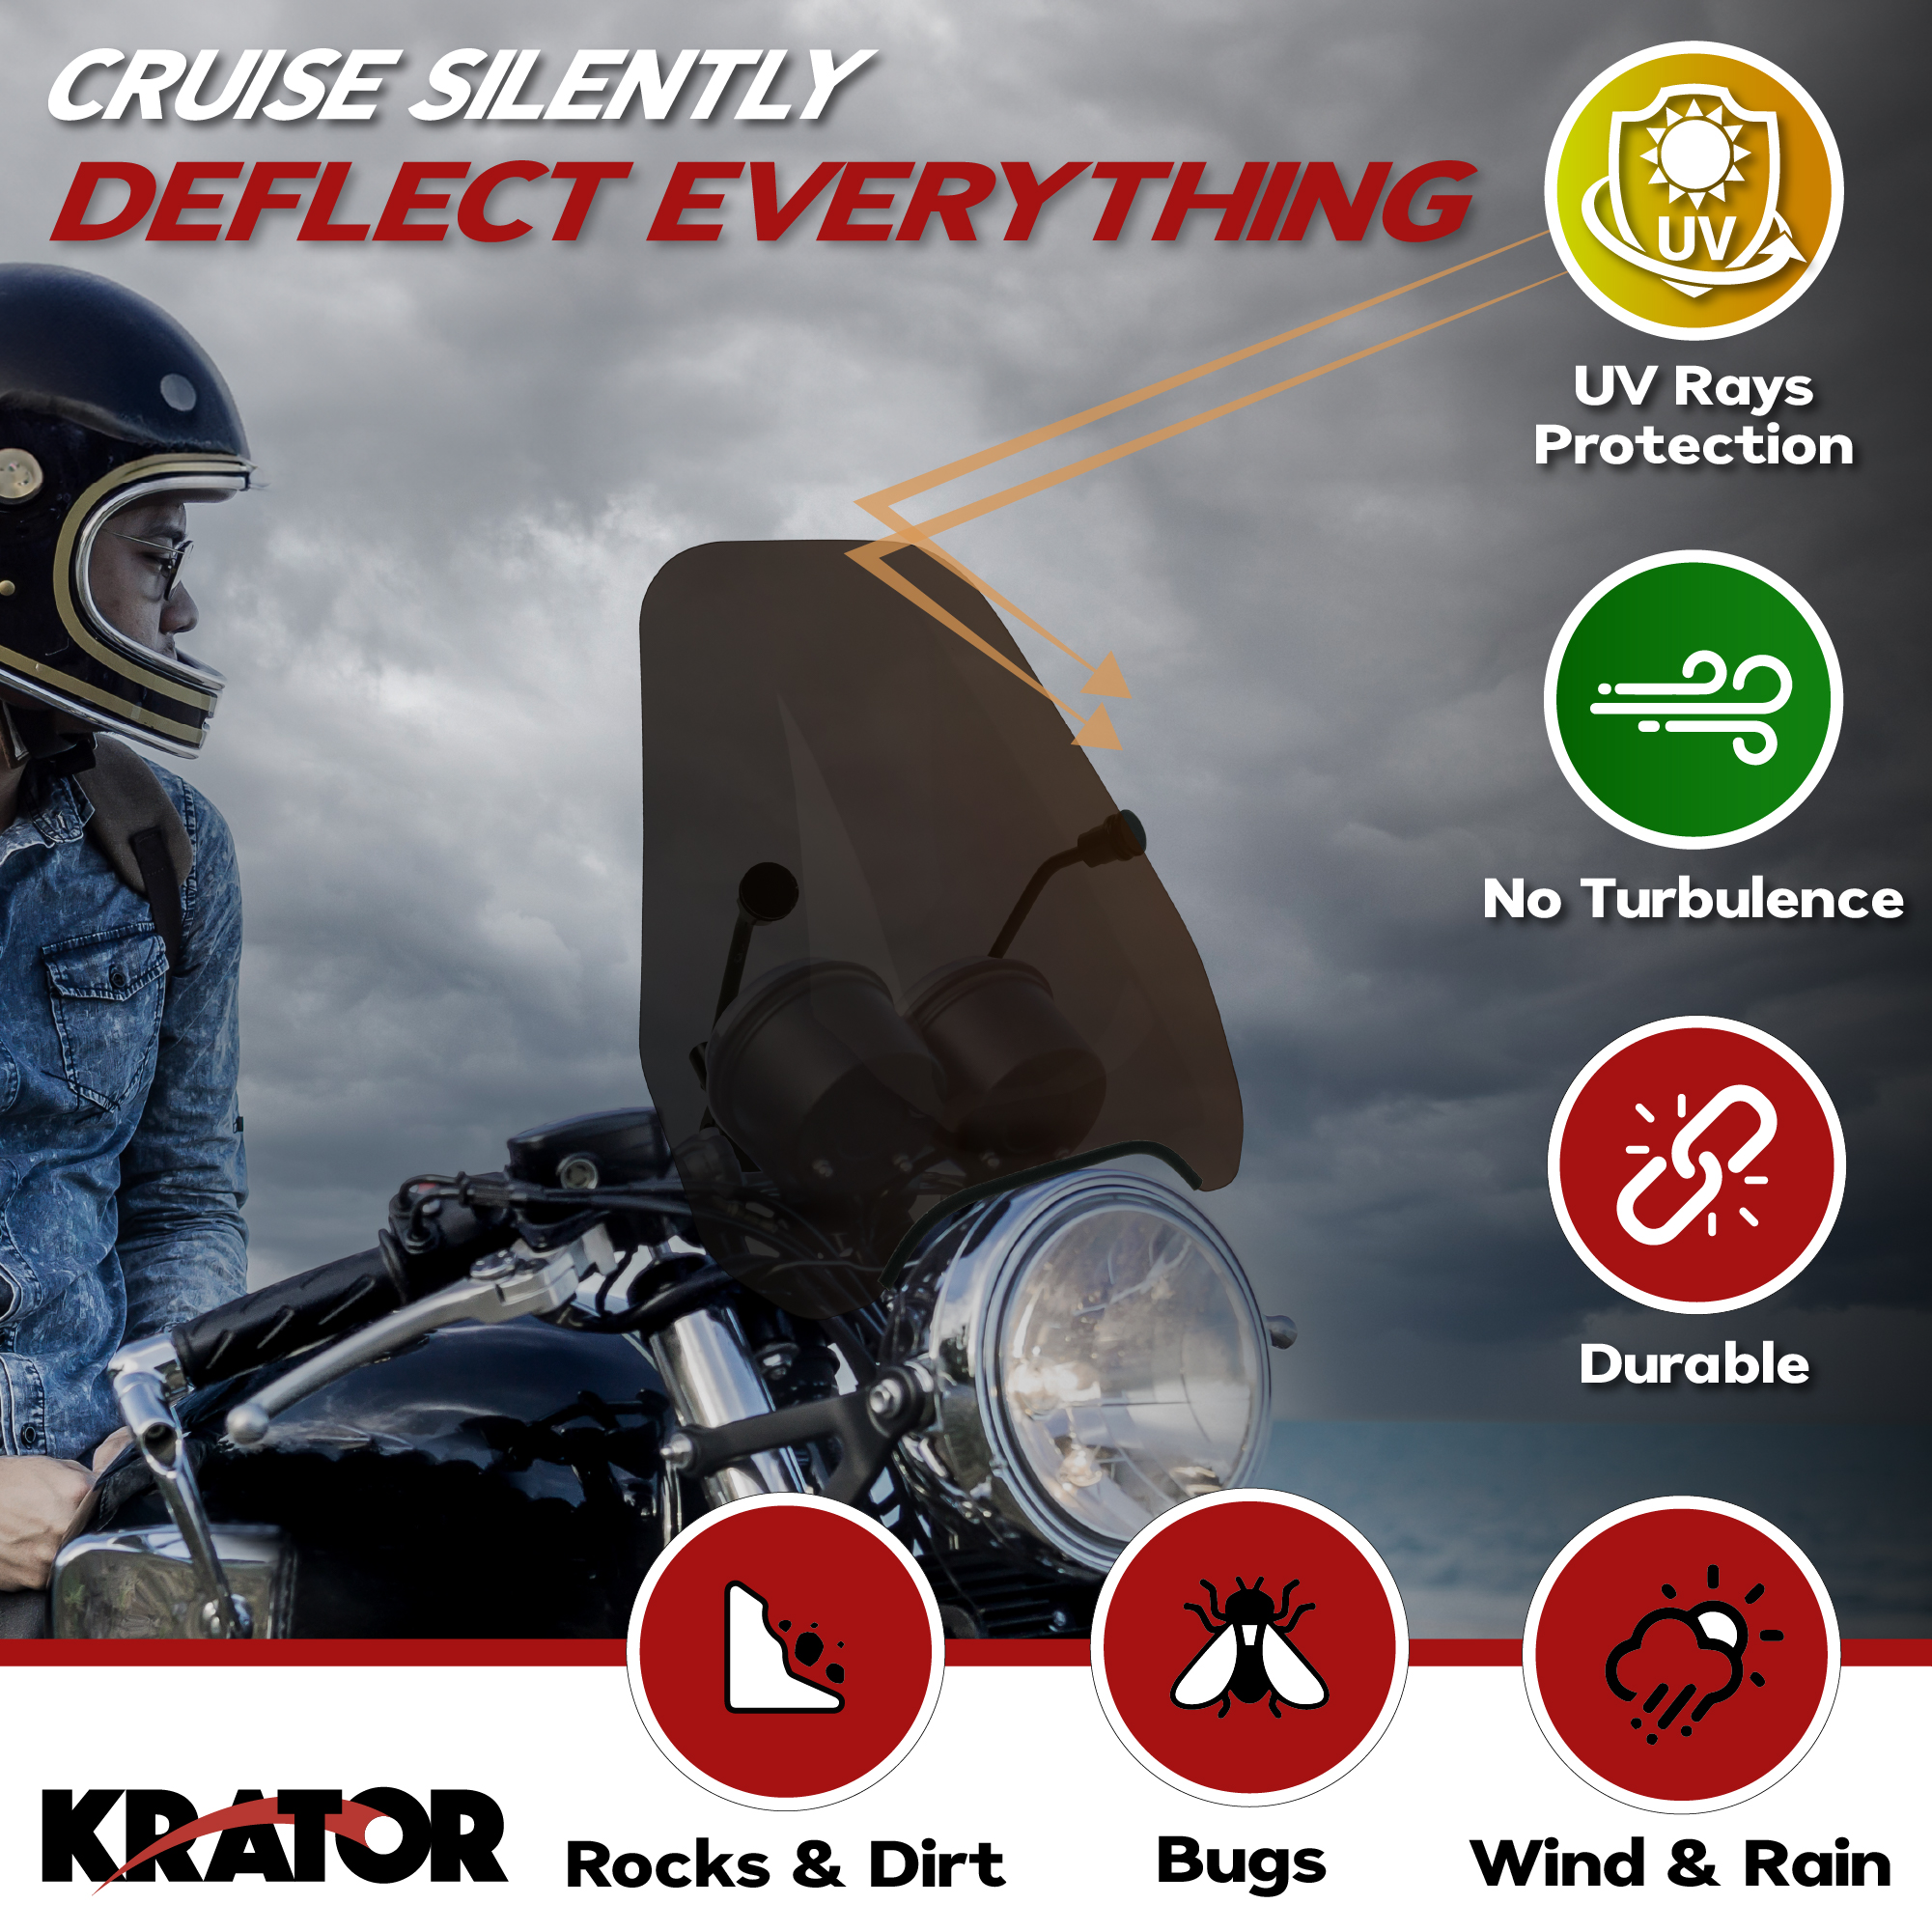 Krator 15" Smoke Tinted Windscreen Windshield Compatible with Harley-Davidson V-Rod VRSC/B/R/AW/DX (2002-2017) Fits 7/8" or 1"